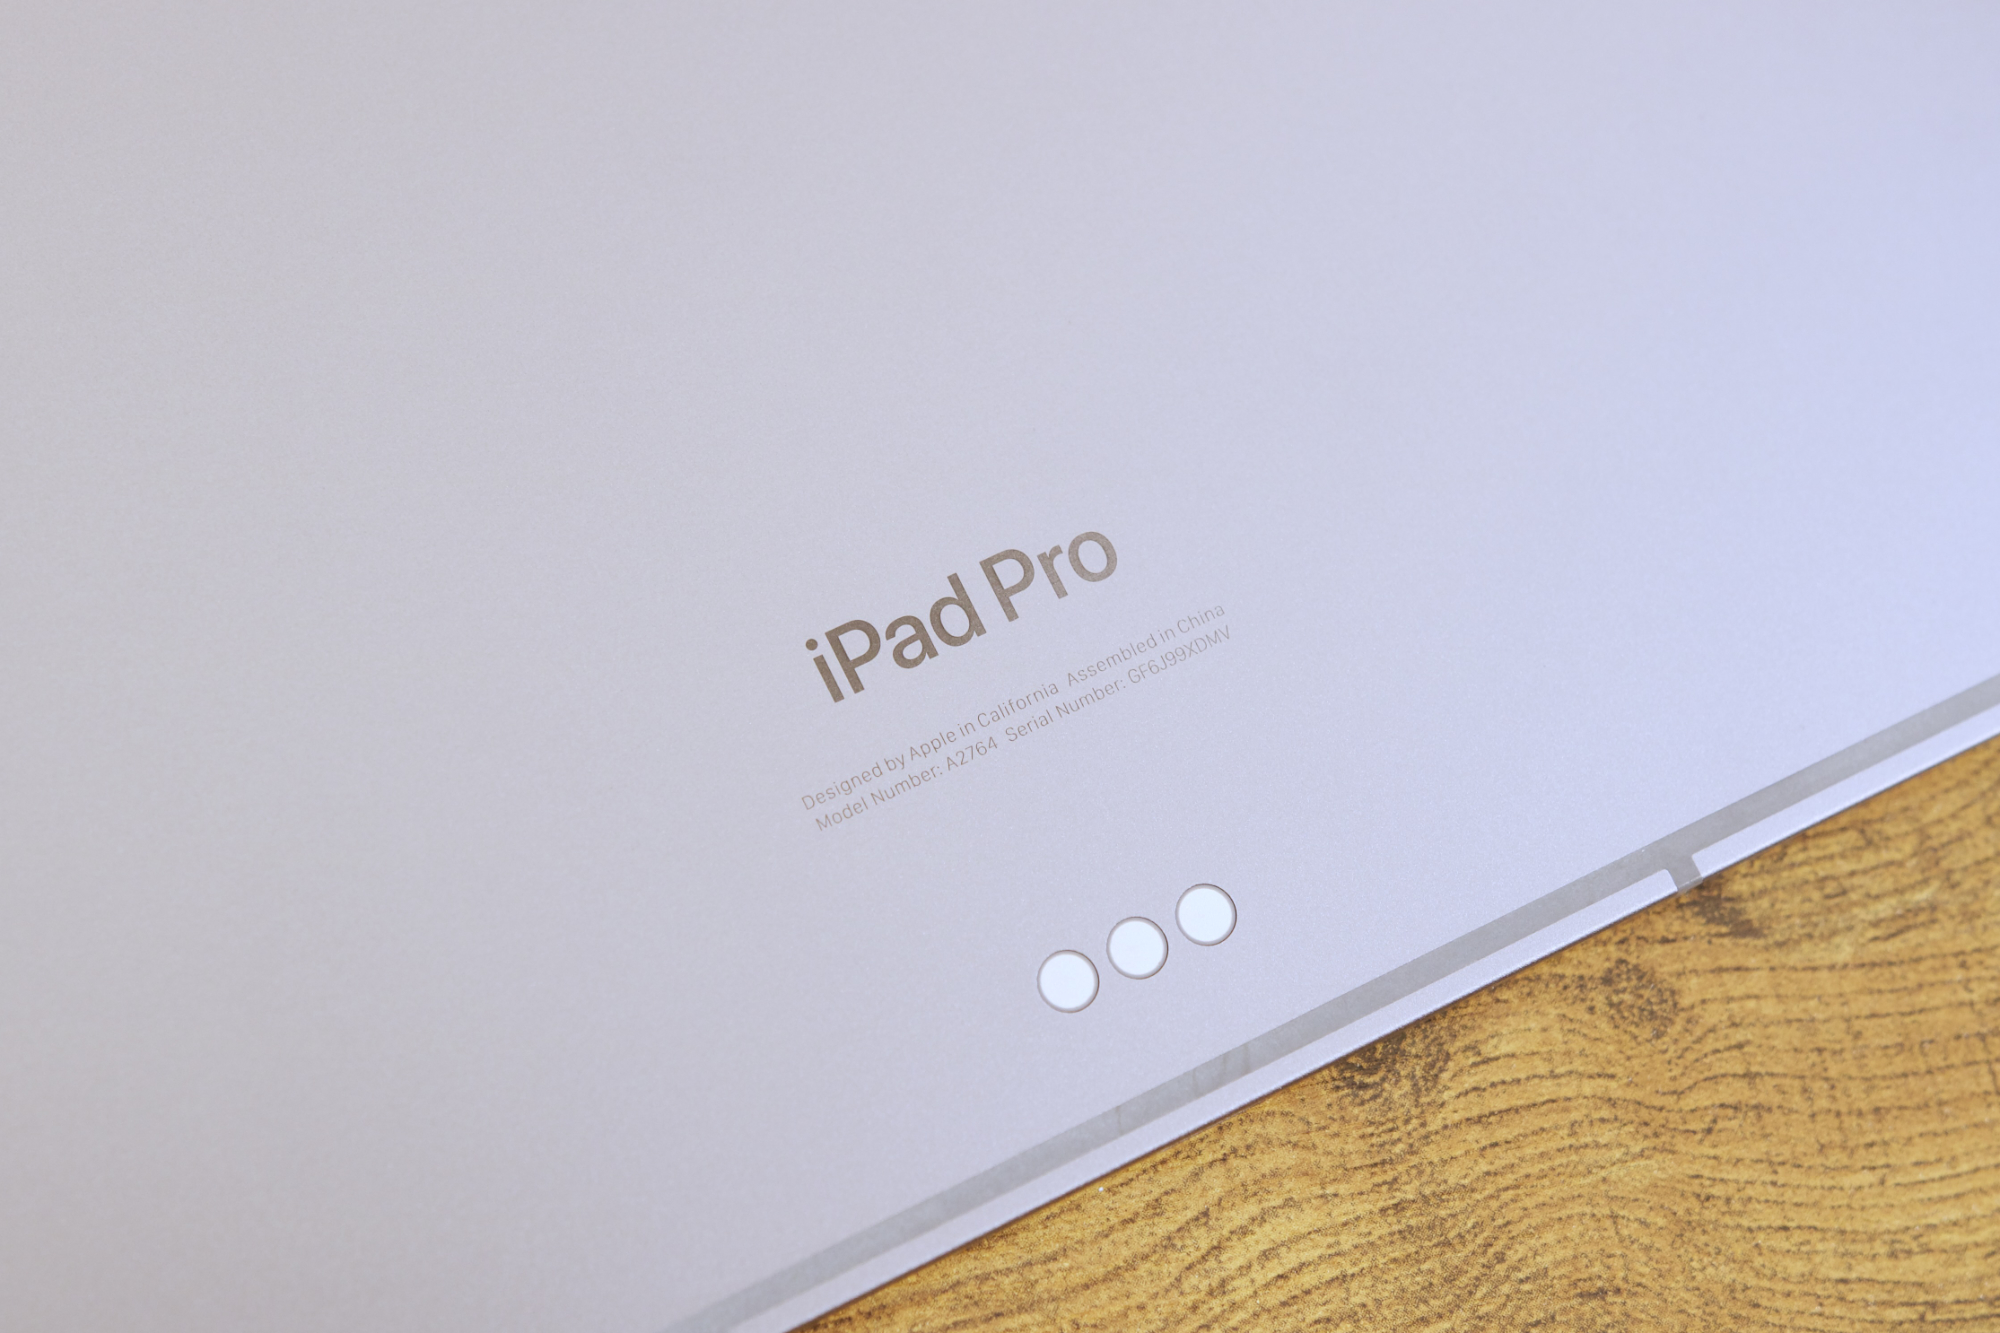 5 ways Apple needs to turbocharge the next iPad Pro